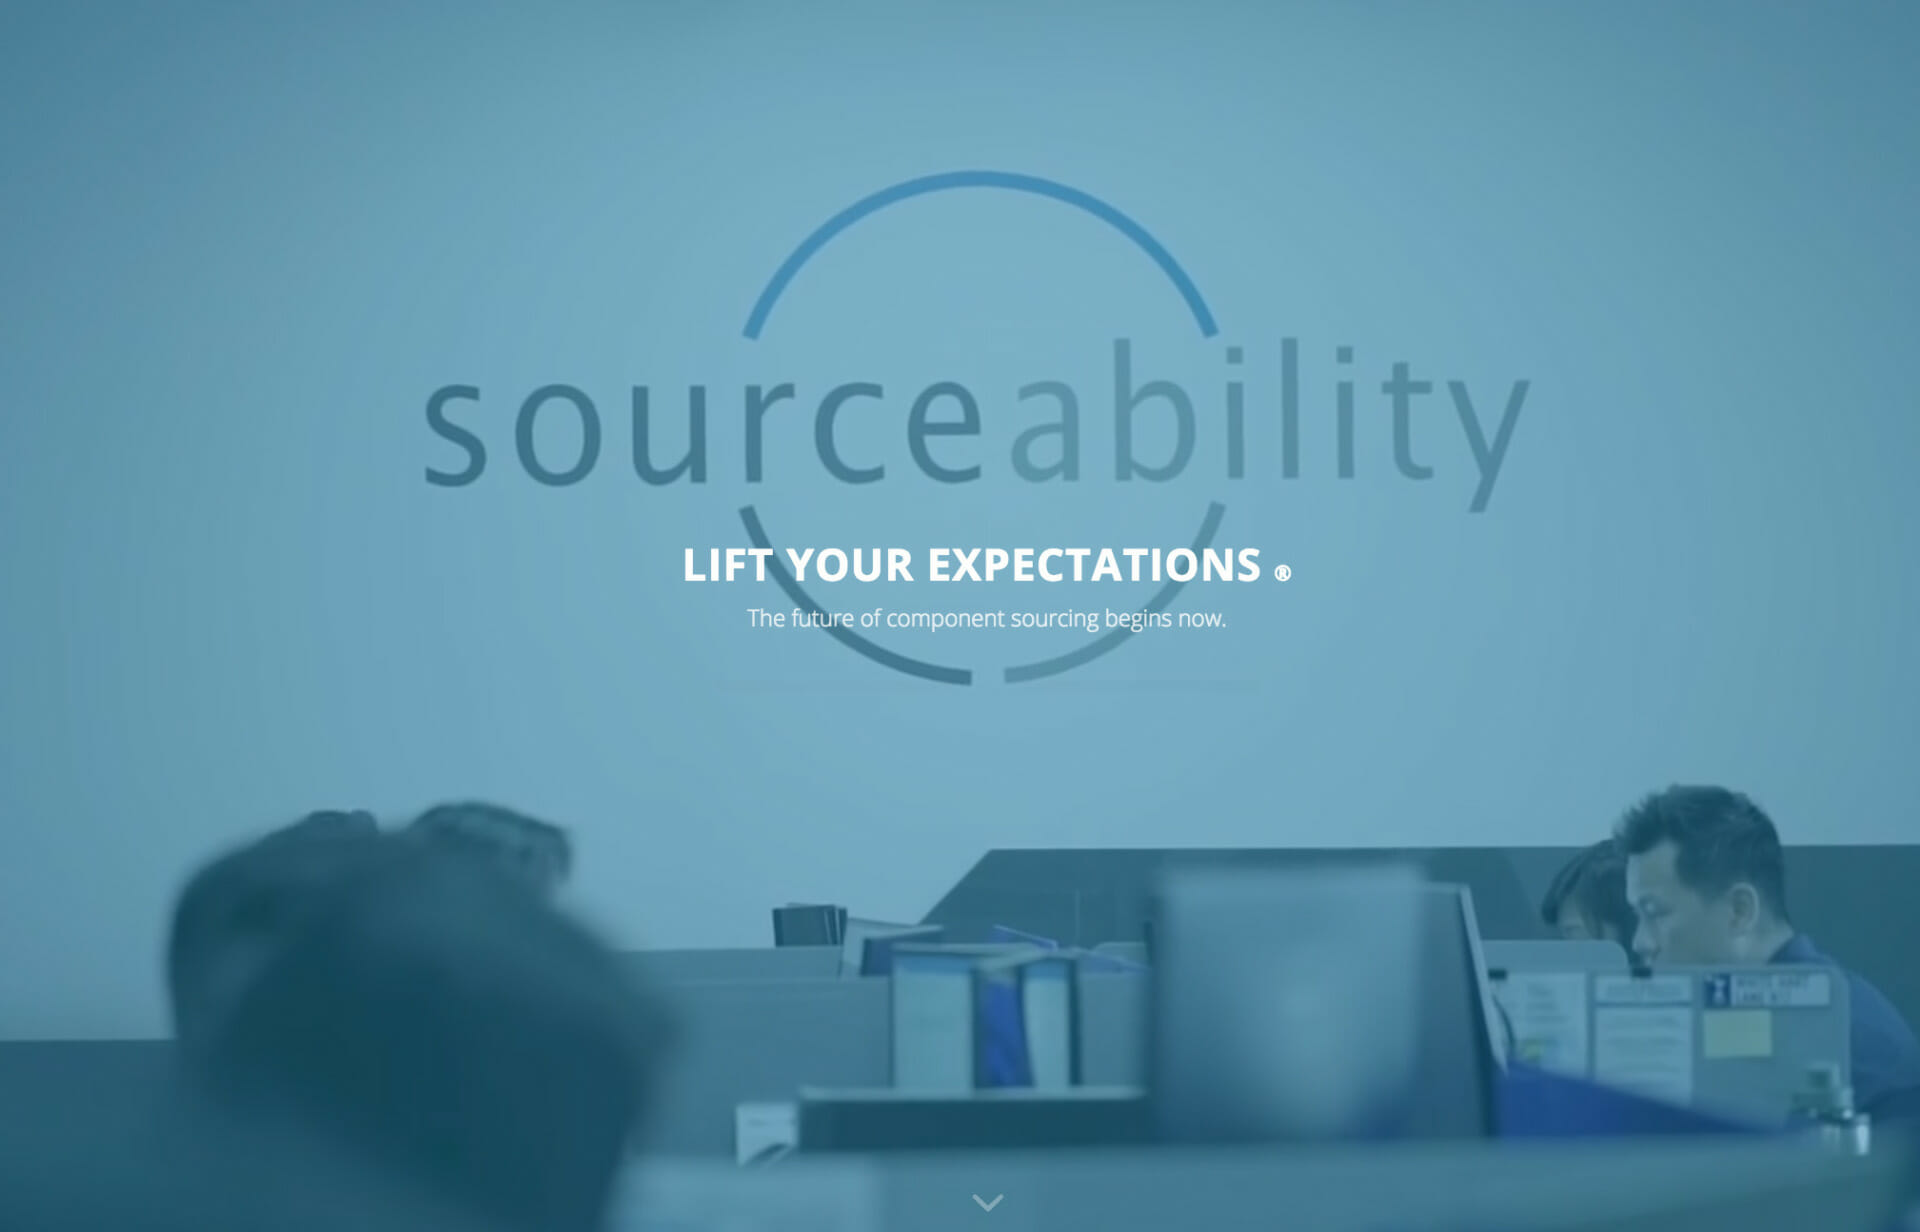 Sourceability logo